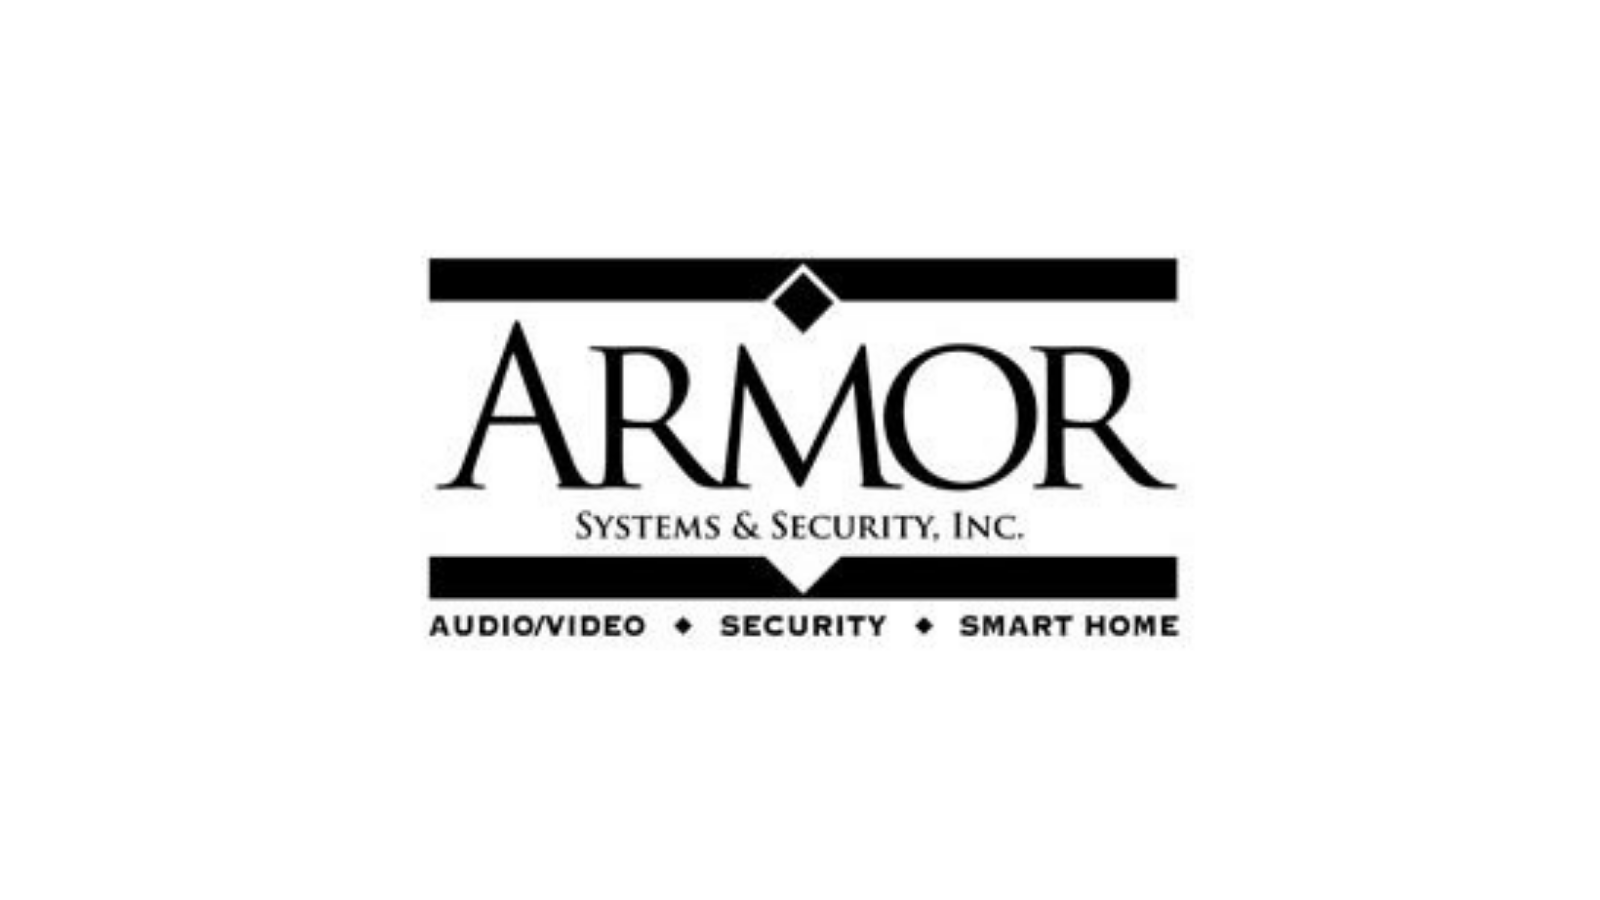 Armor Systems & Security